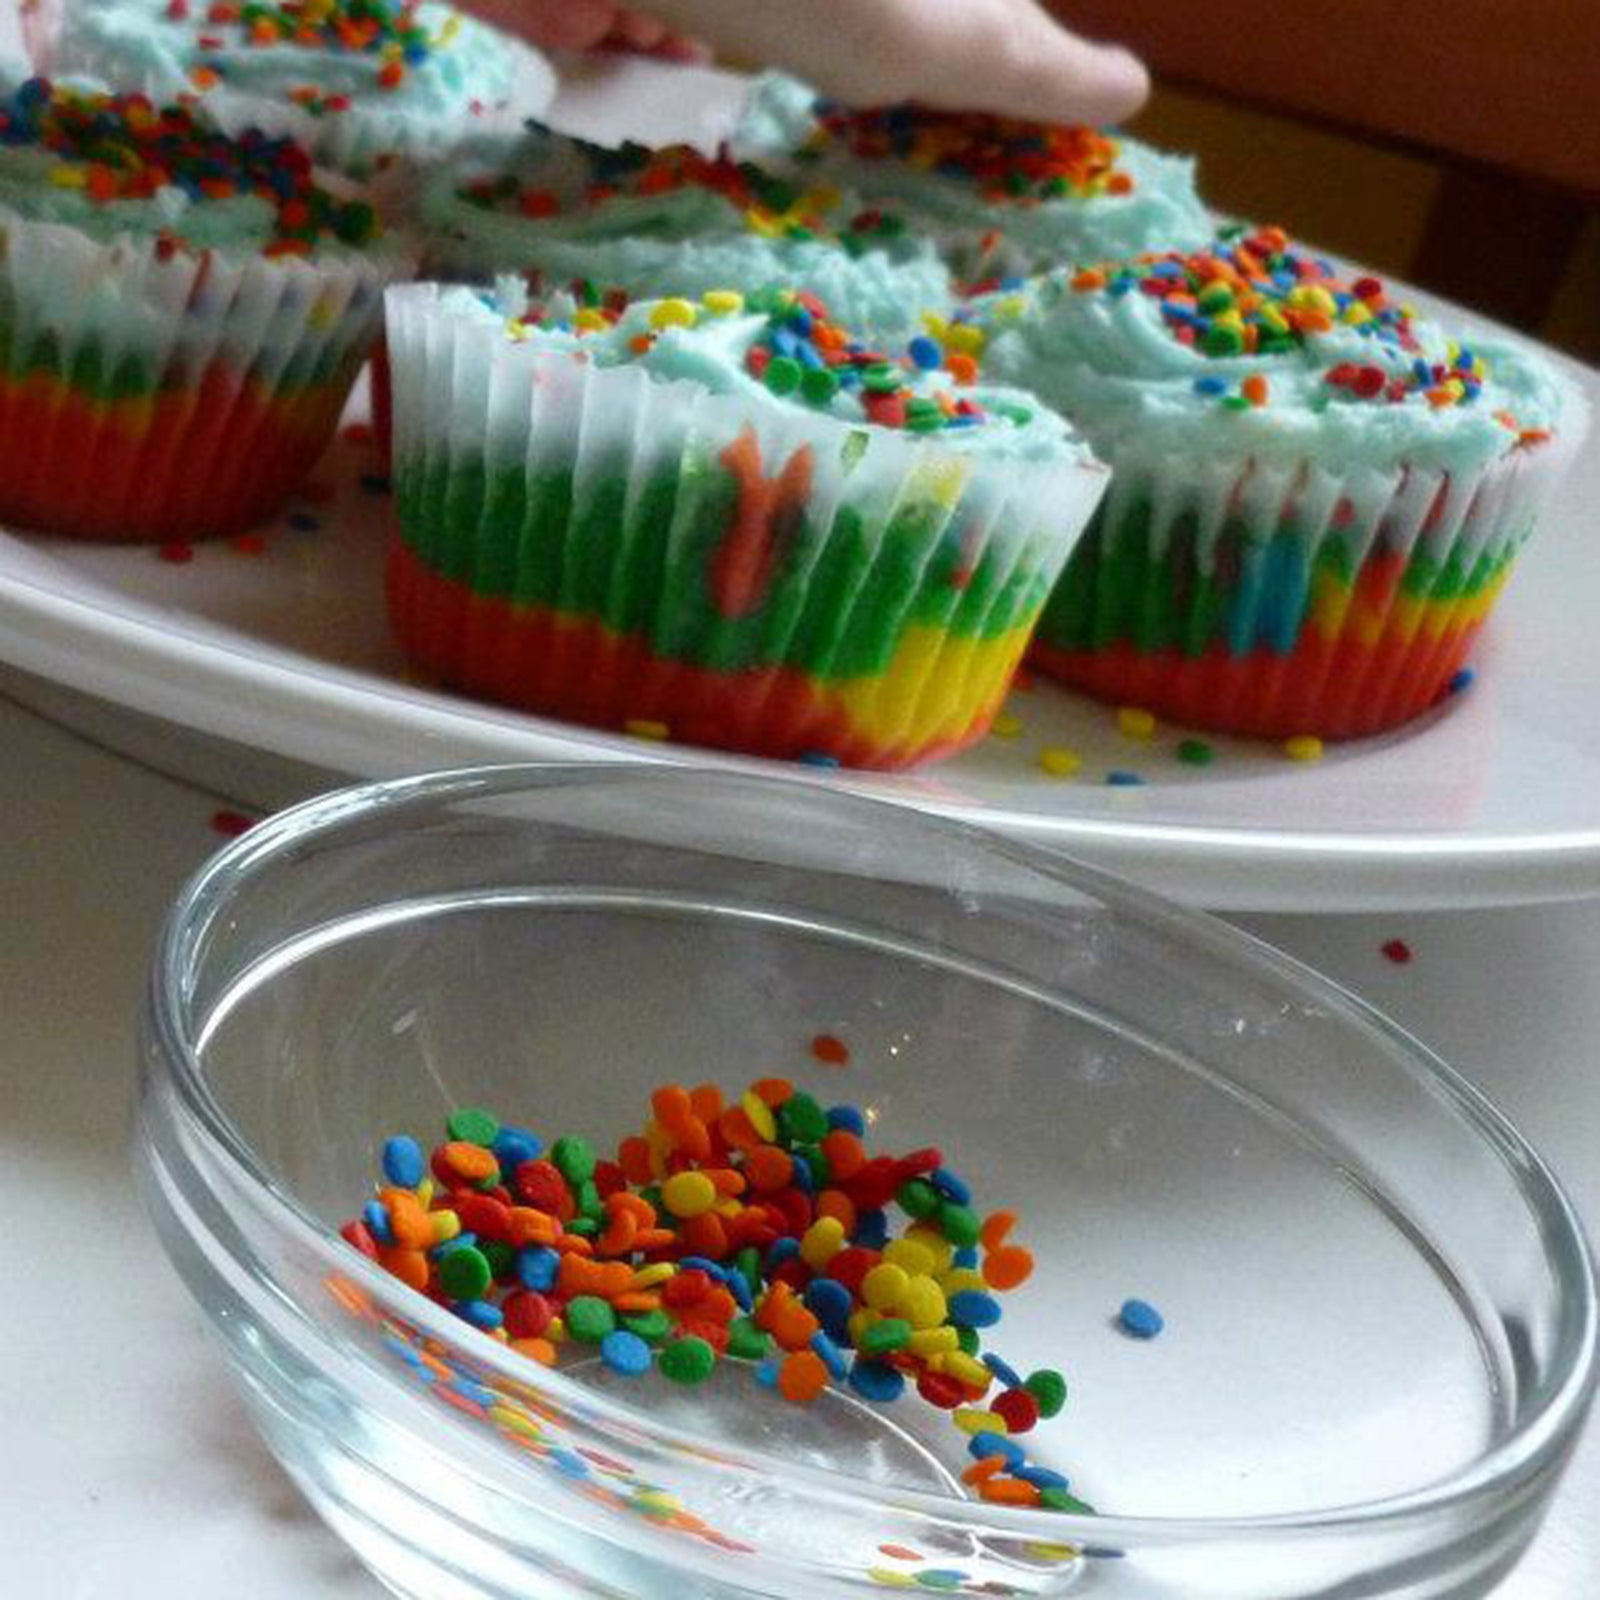 St. Patrick's Day Rainbow Cupcakes